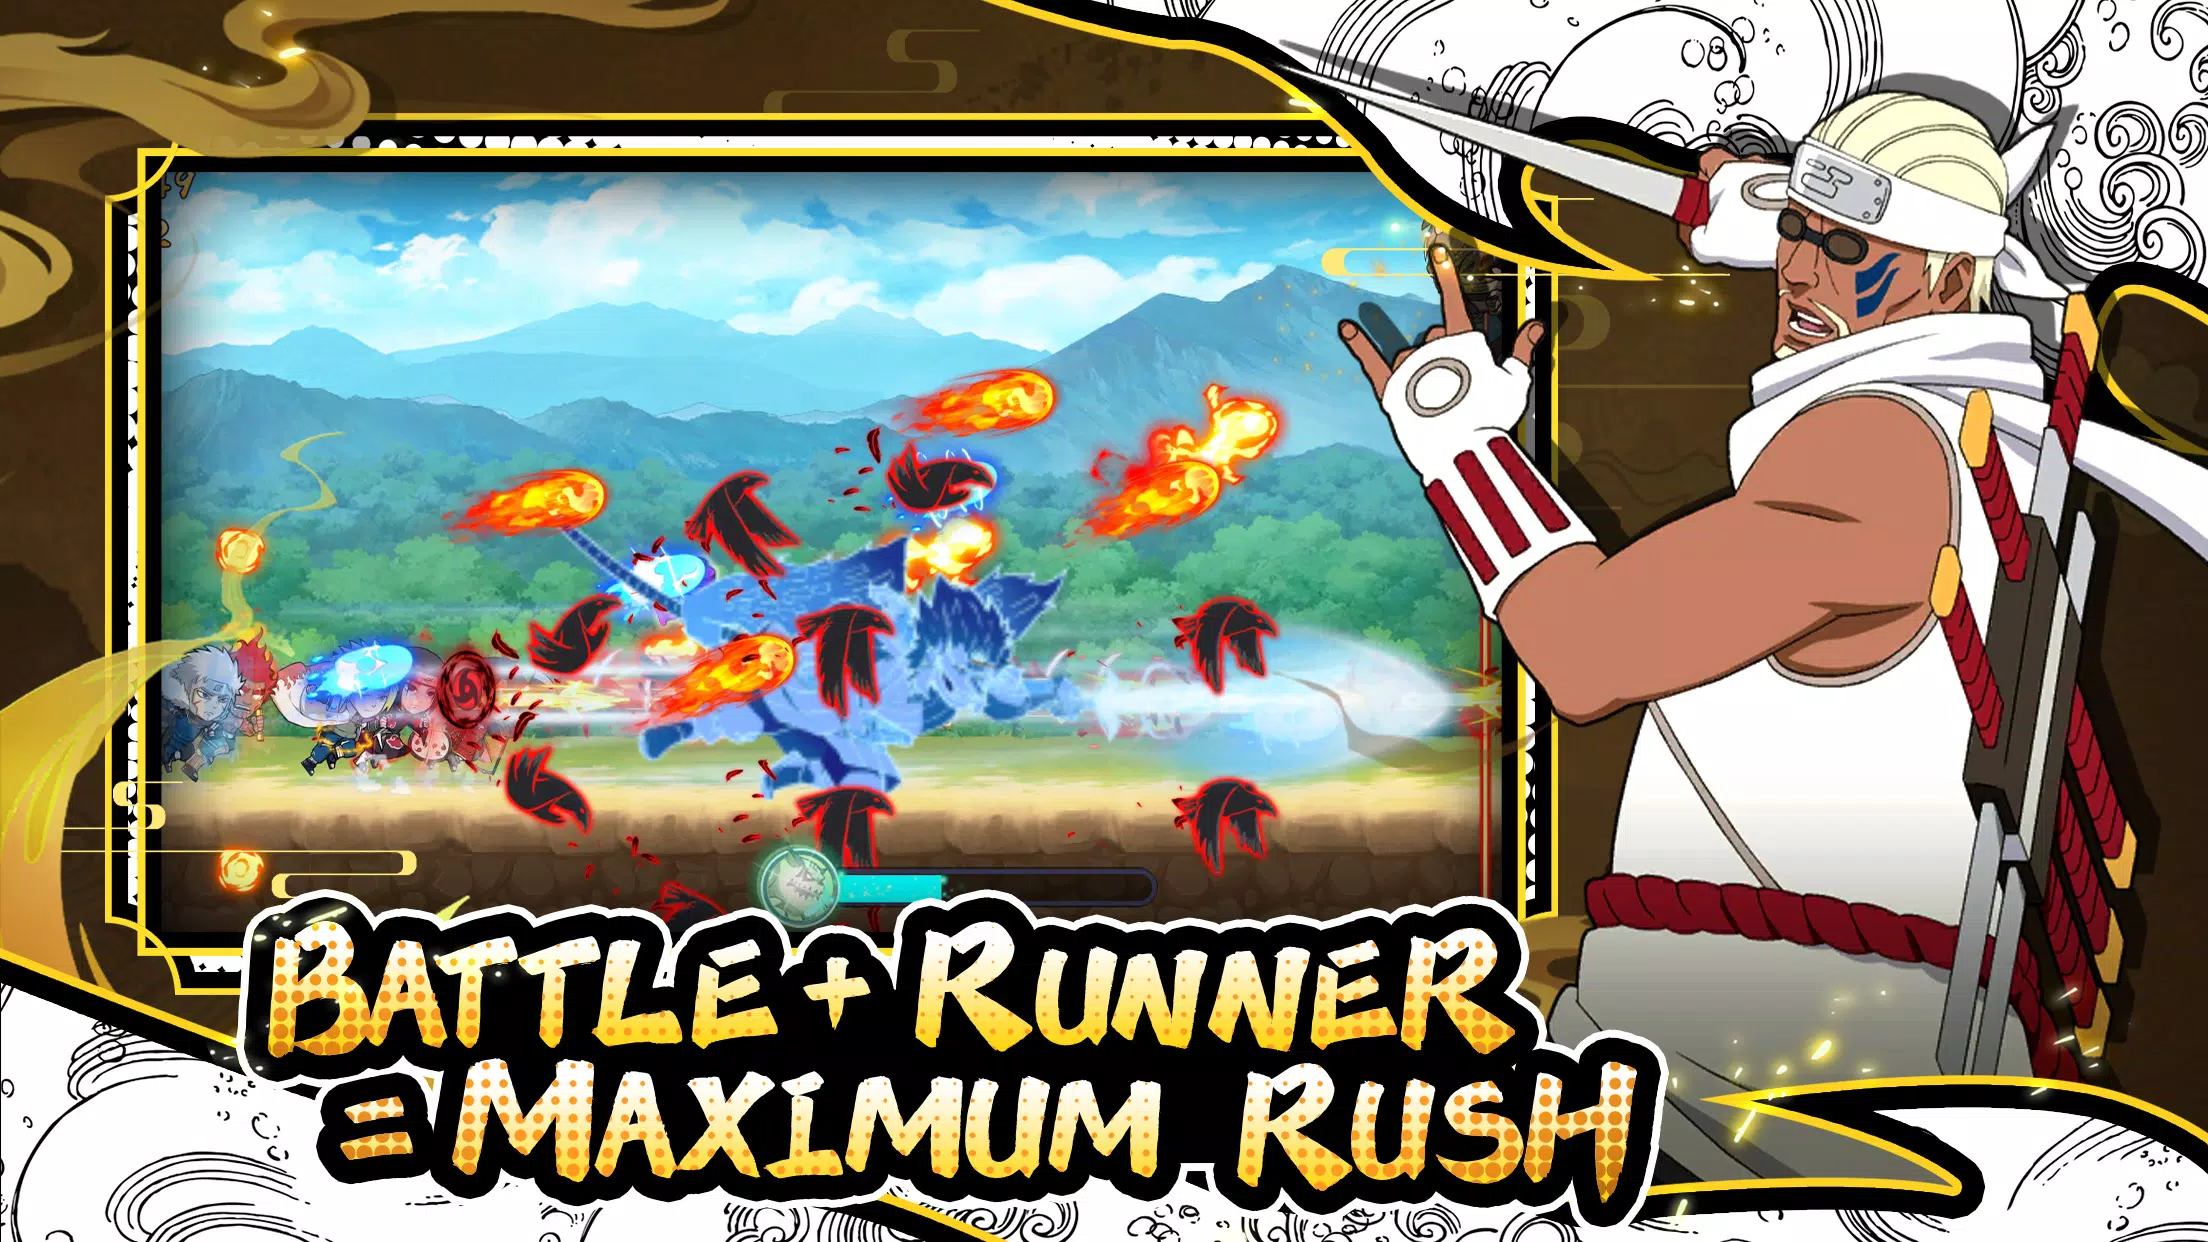 Ninja Run 2: Revenge Of Shadow Runner APK (Android Game) - Free Download